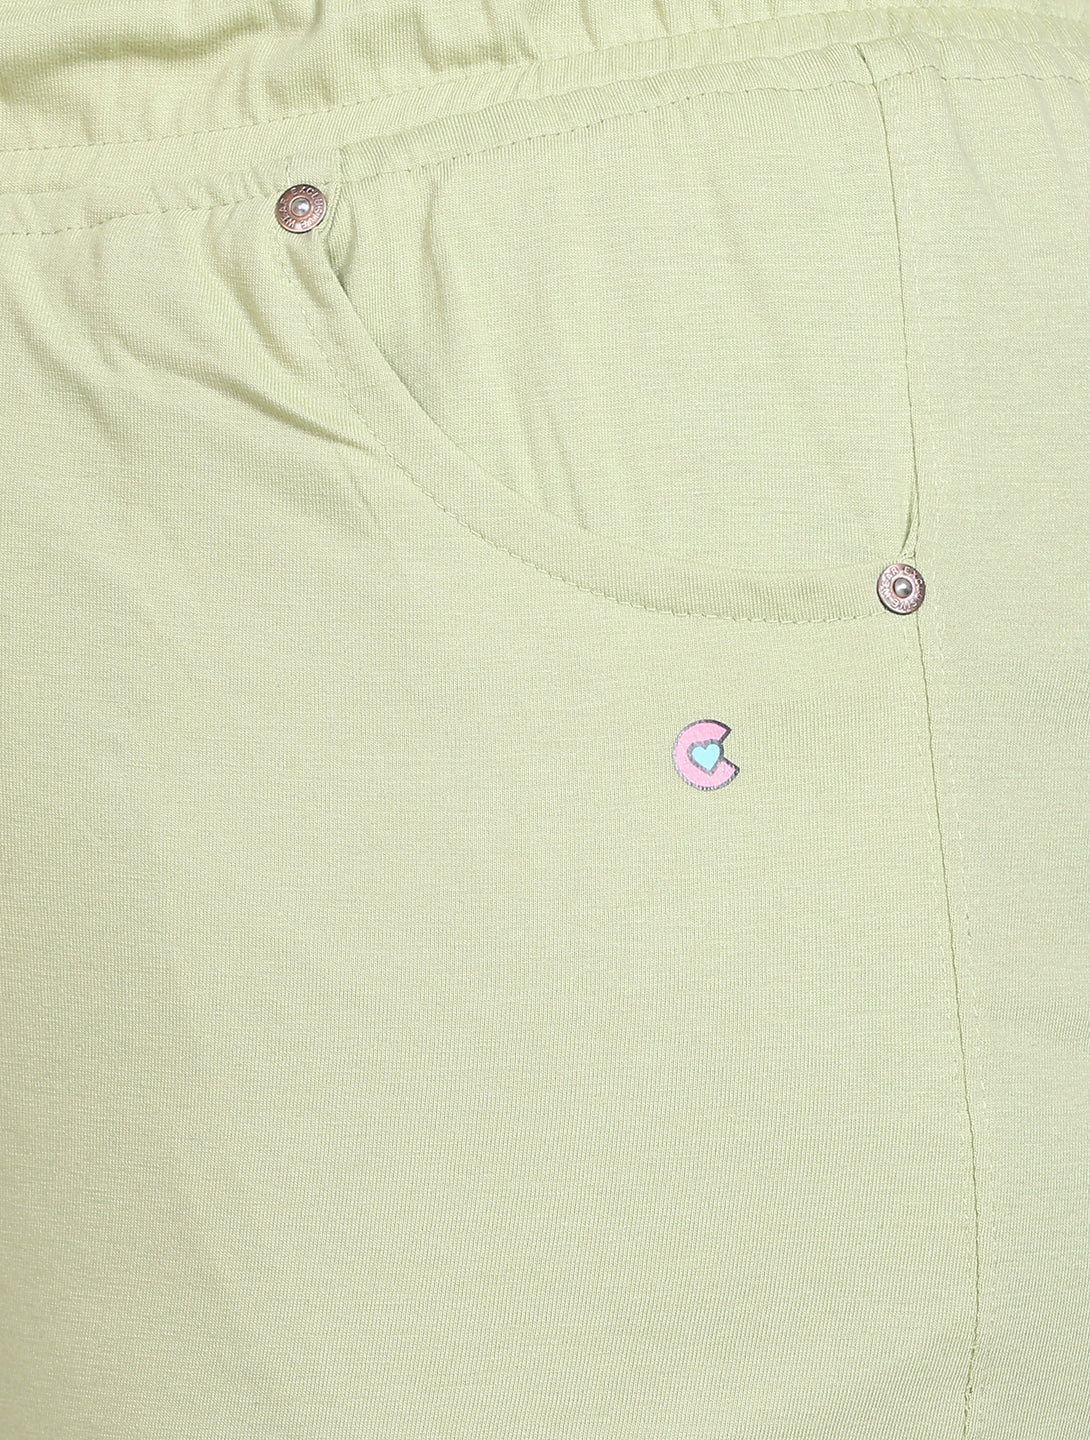 Cotton Capris For Women - Half Capri Pants - Cardamom  Green (3XL-7XL)